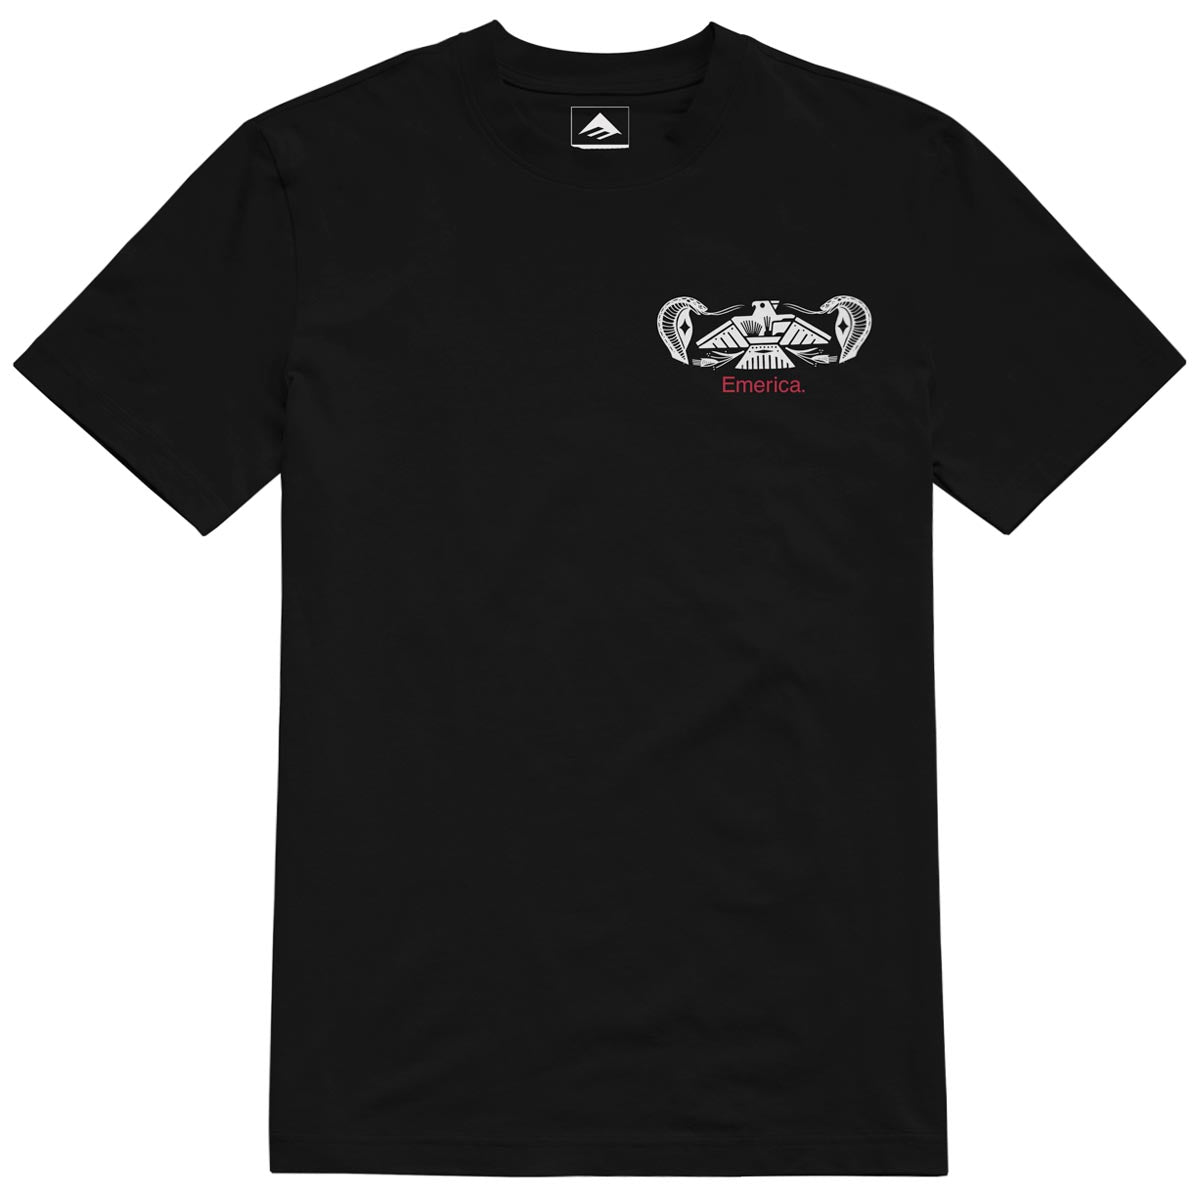 Emerica x Jess Mudgett T-Shirt - Black image 1